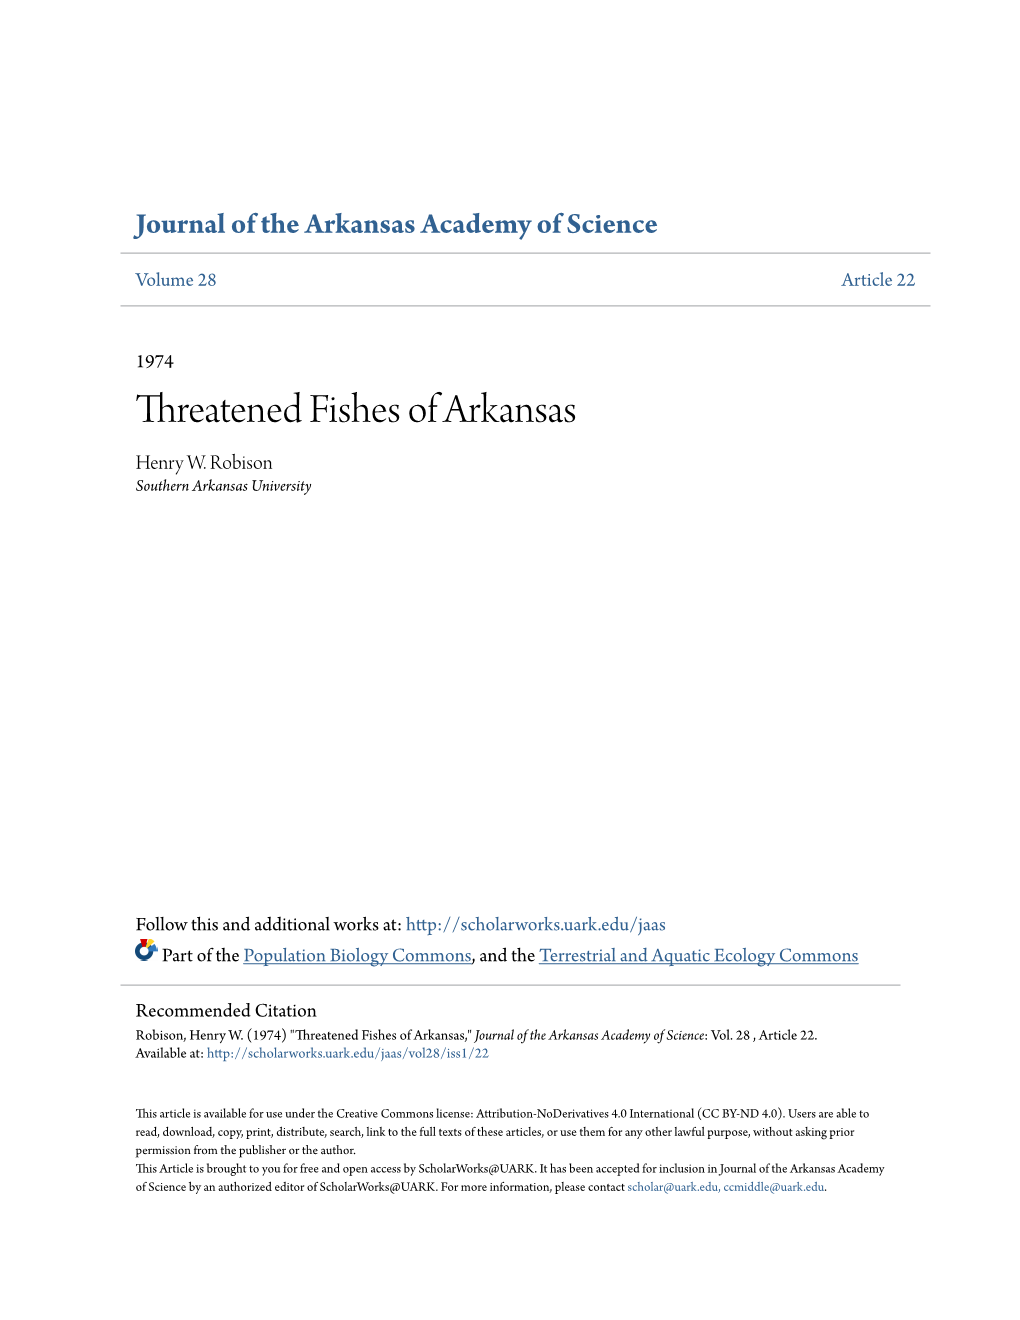 Threatened Fishes of Arkansas Henry W